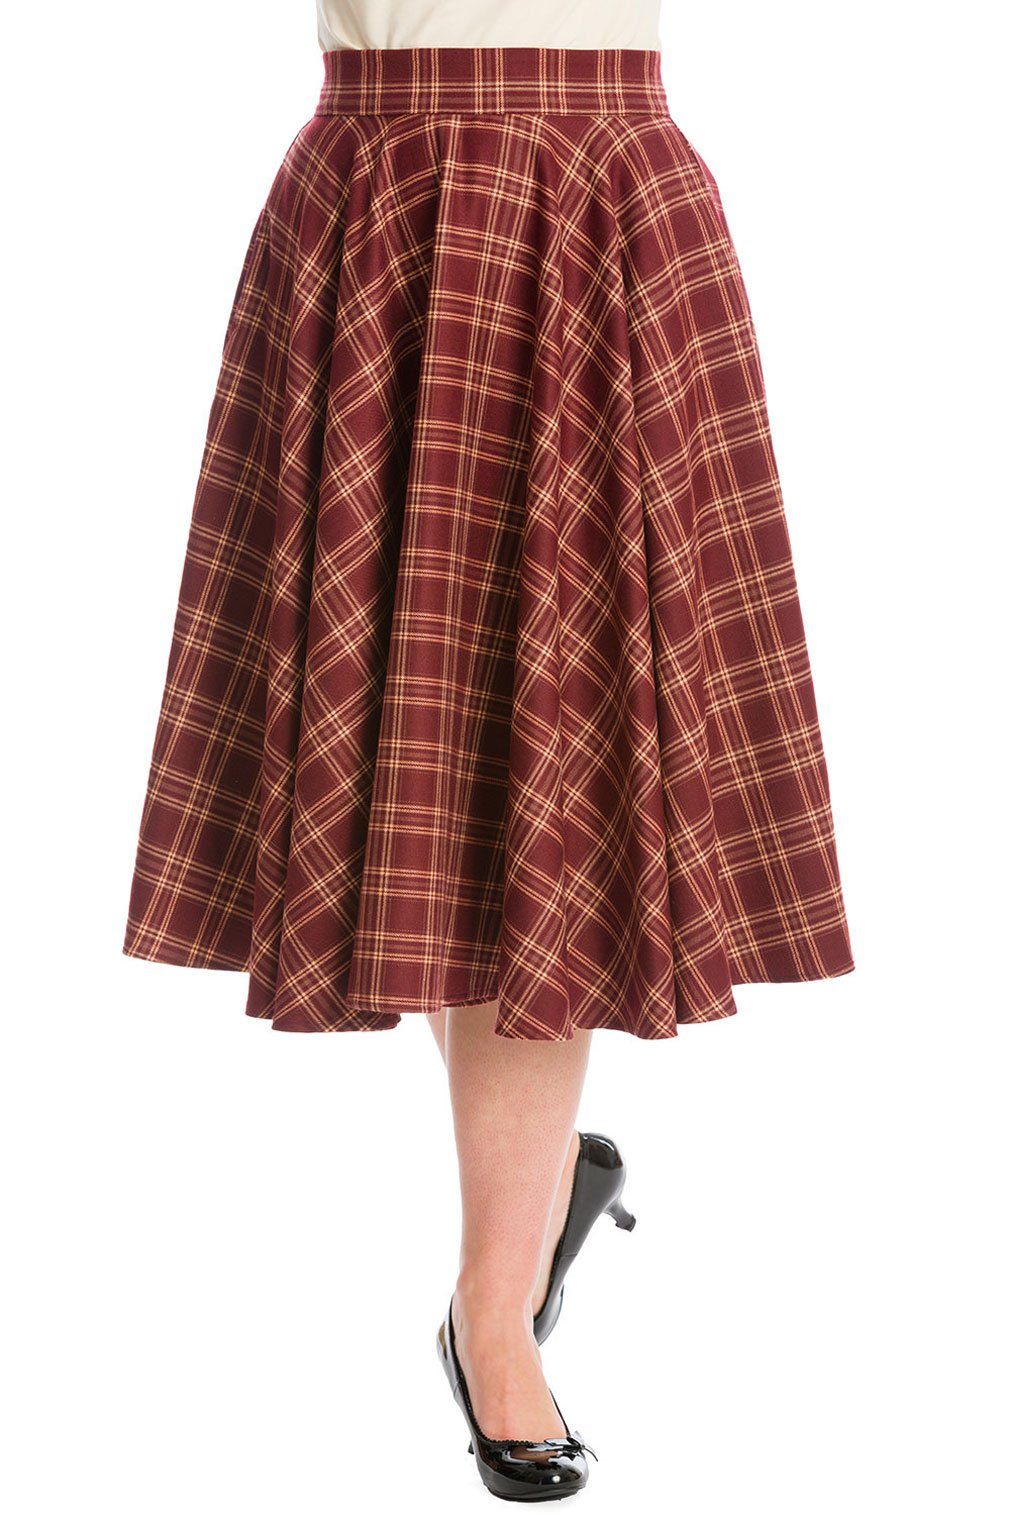 Banned A-Linien-Rock Adore Her Burgunder Kariert Retro Vintage Swing Skirt